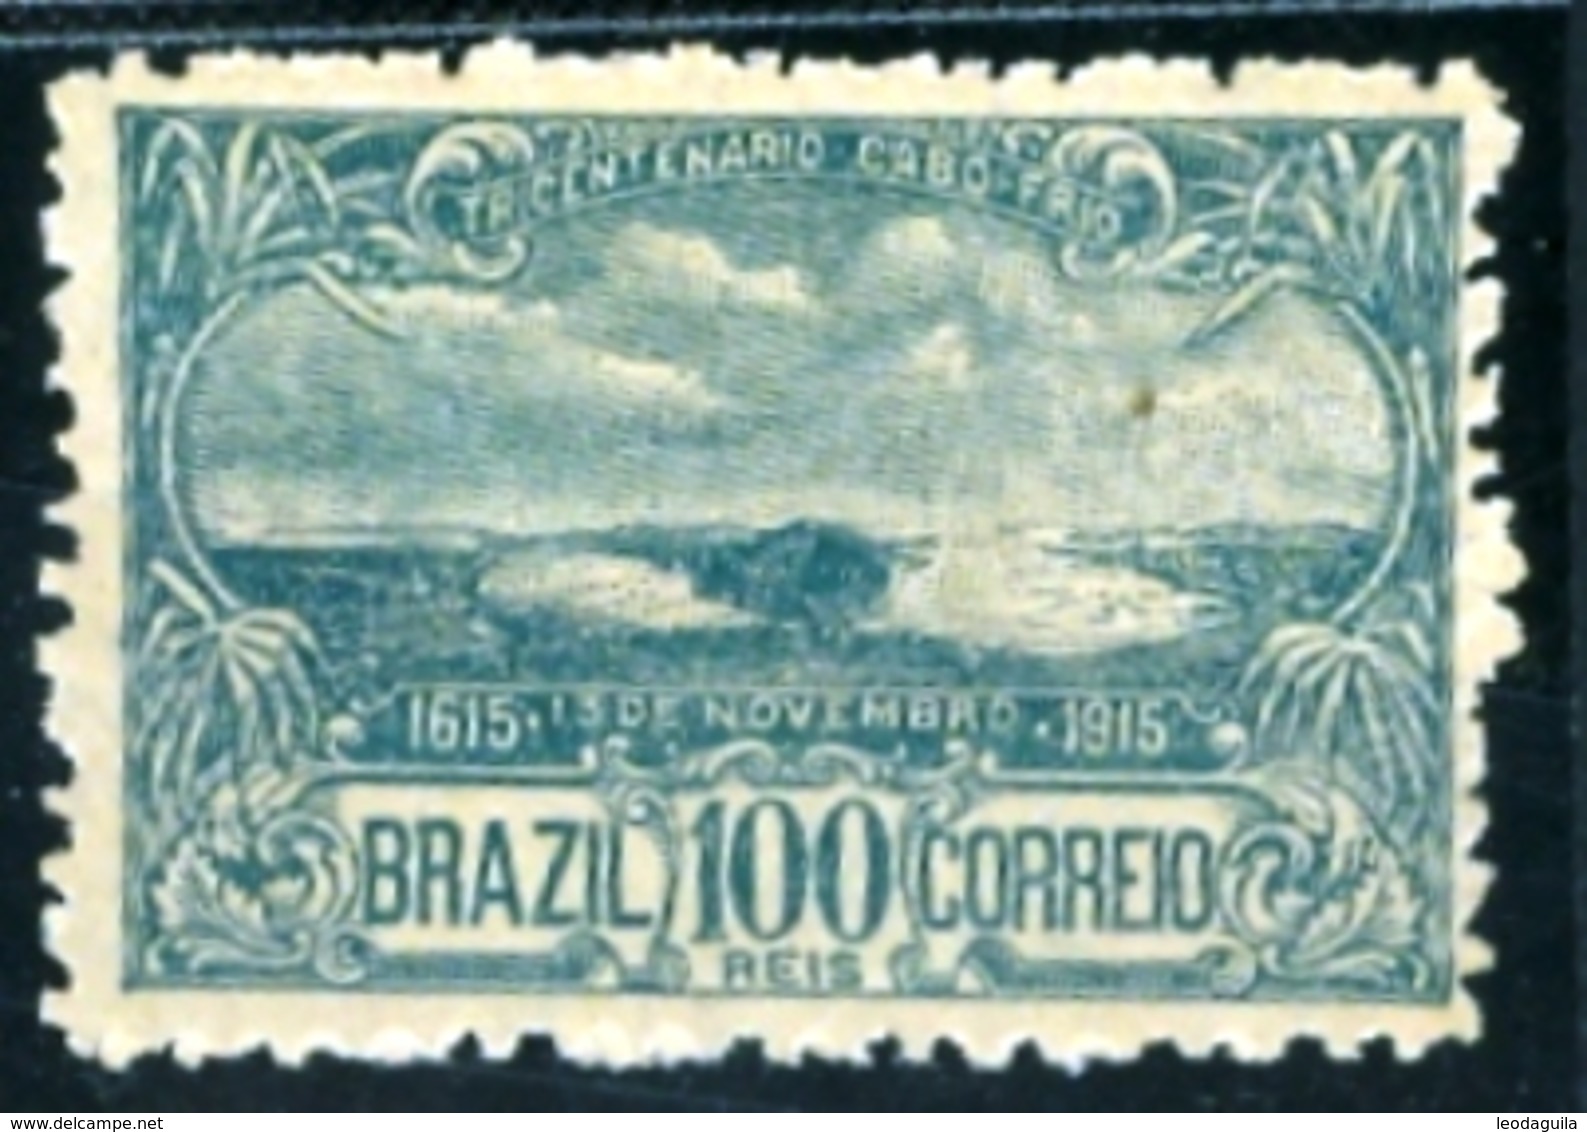 BRAZIL # 165  - FOUNDATION  CITY OF CABO FRIO - 3rd  CENTENARY  -  MINT / OG  - 1915 - Unused Stamps